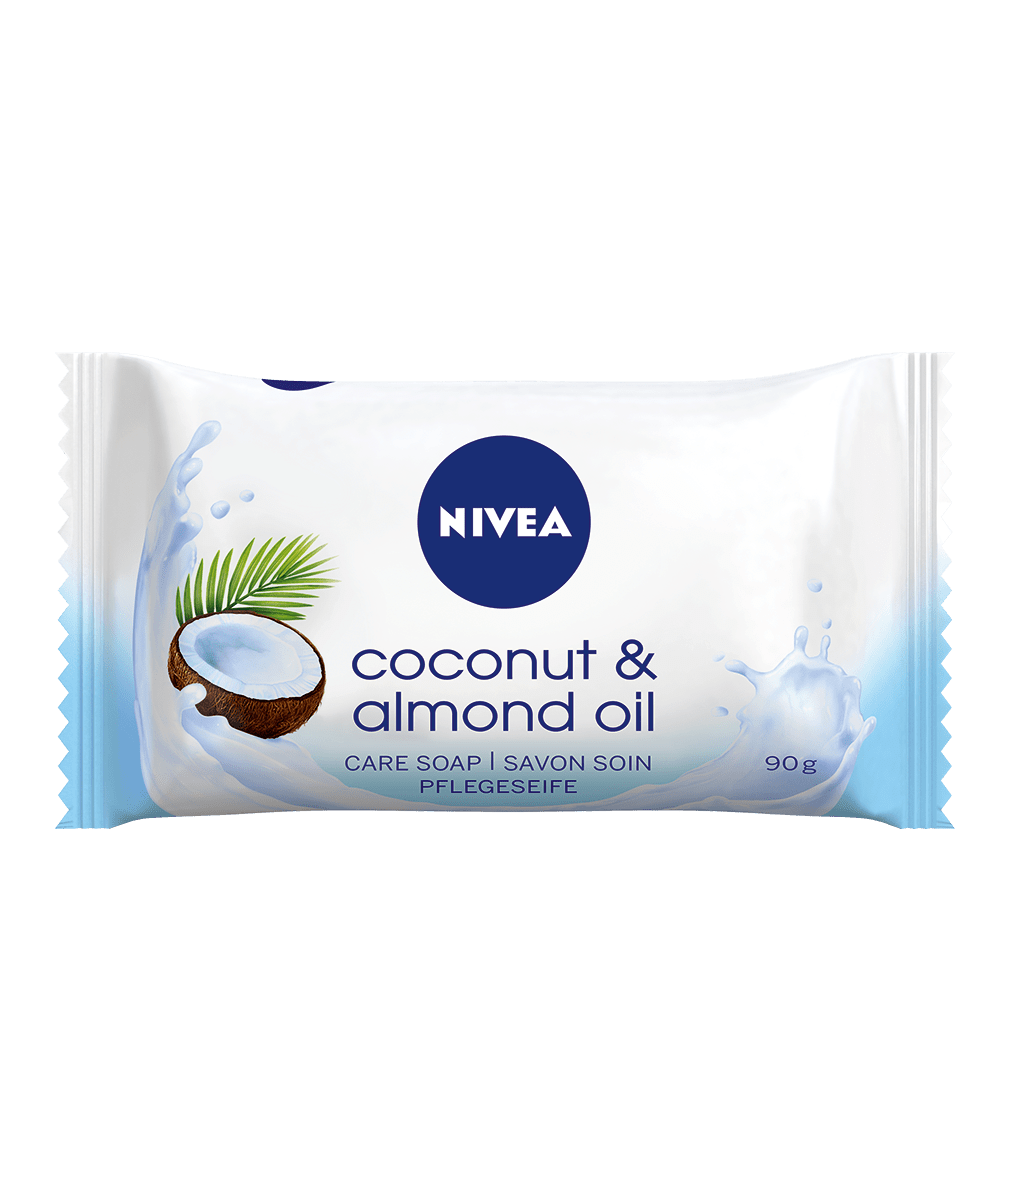 Coconut & Almond Oil Pflegeseife_90g